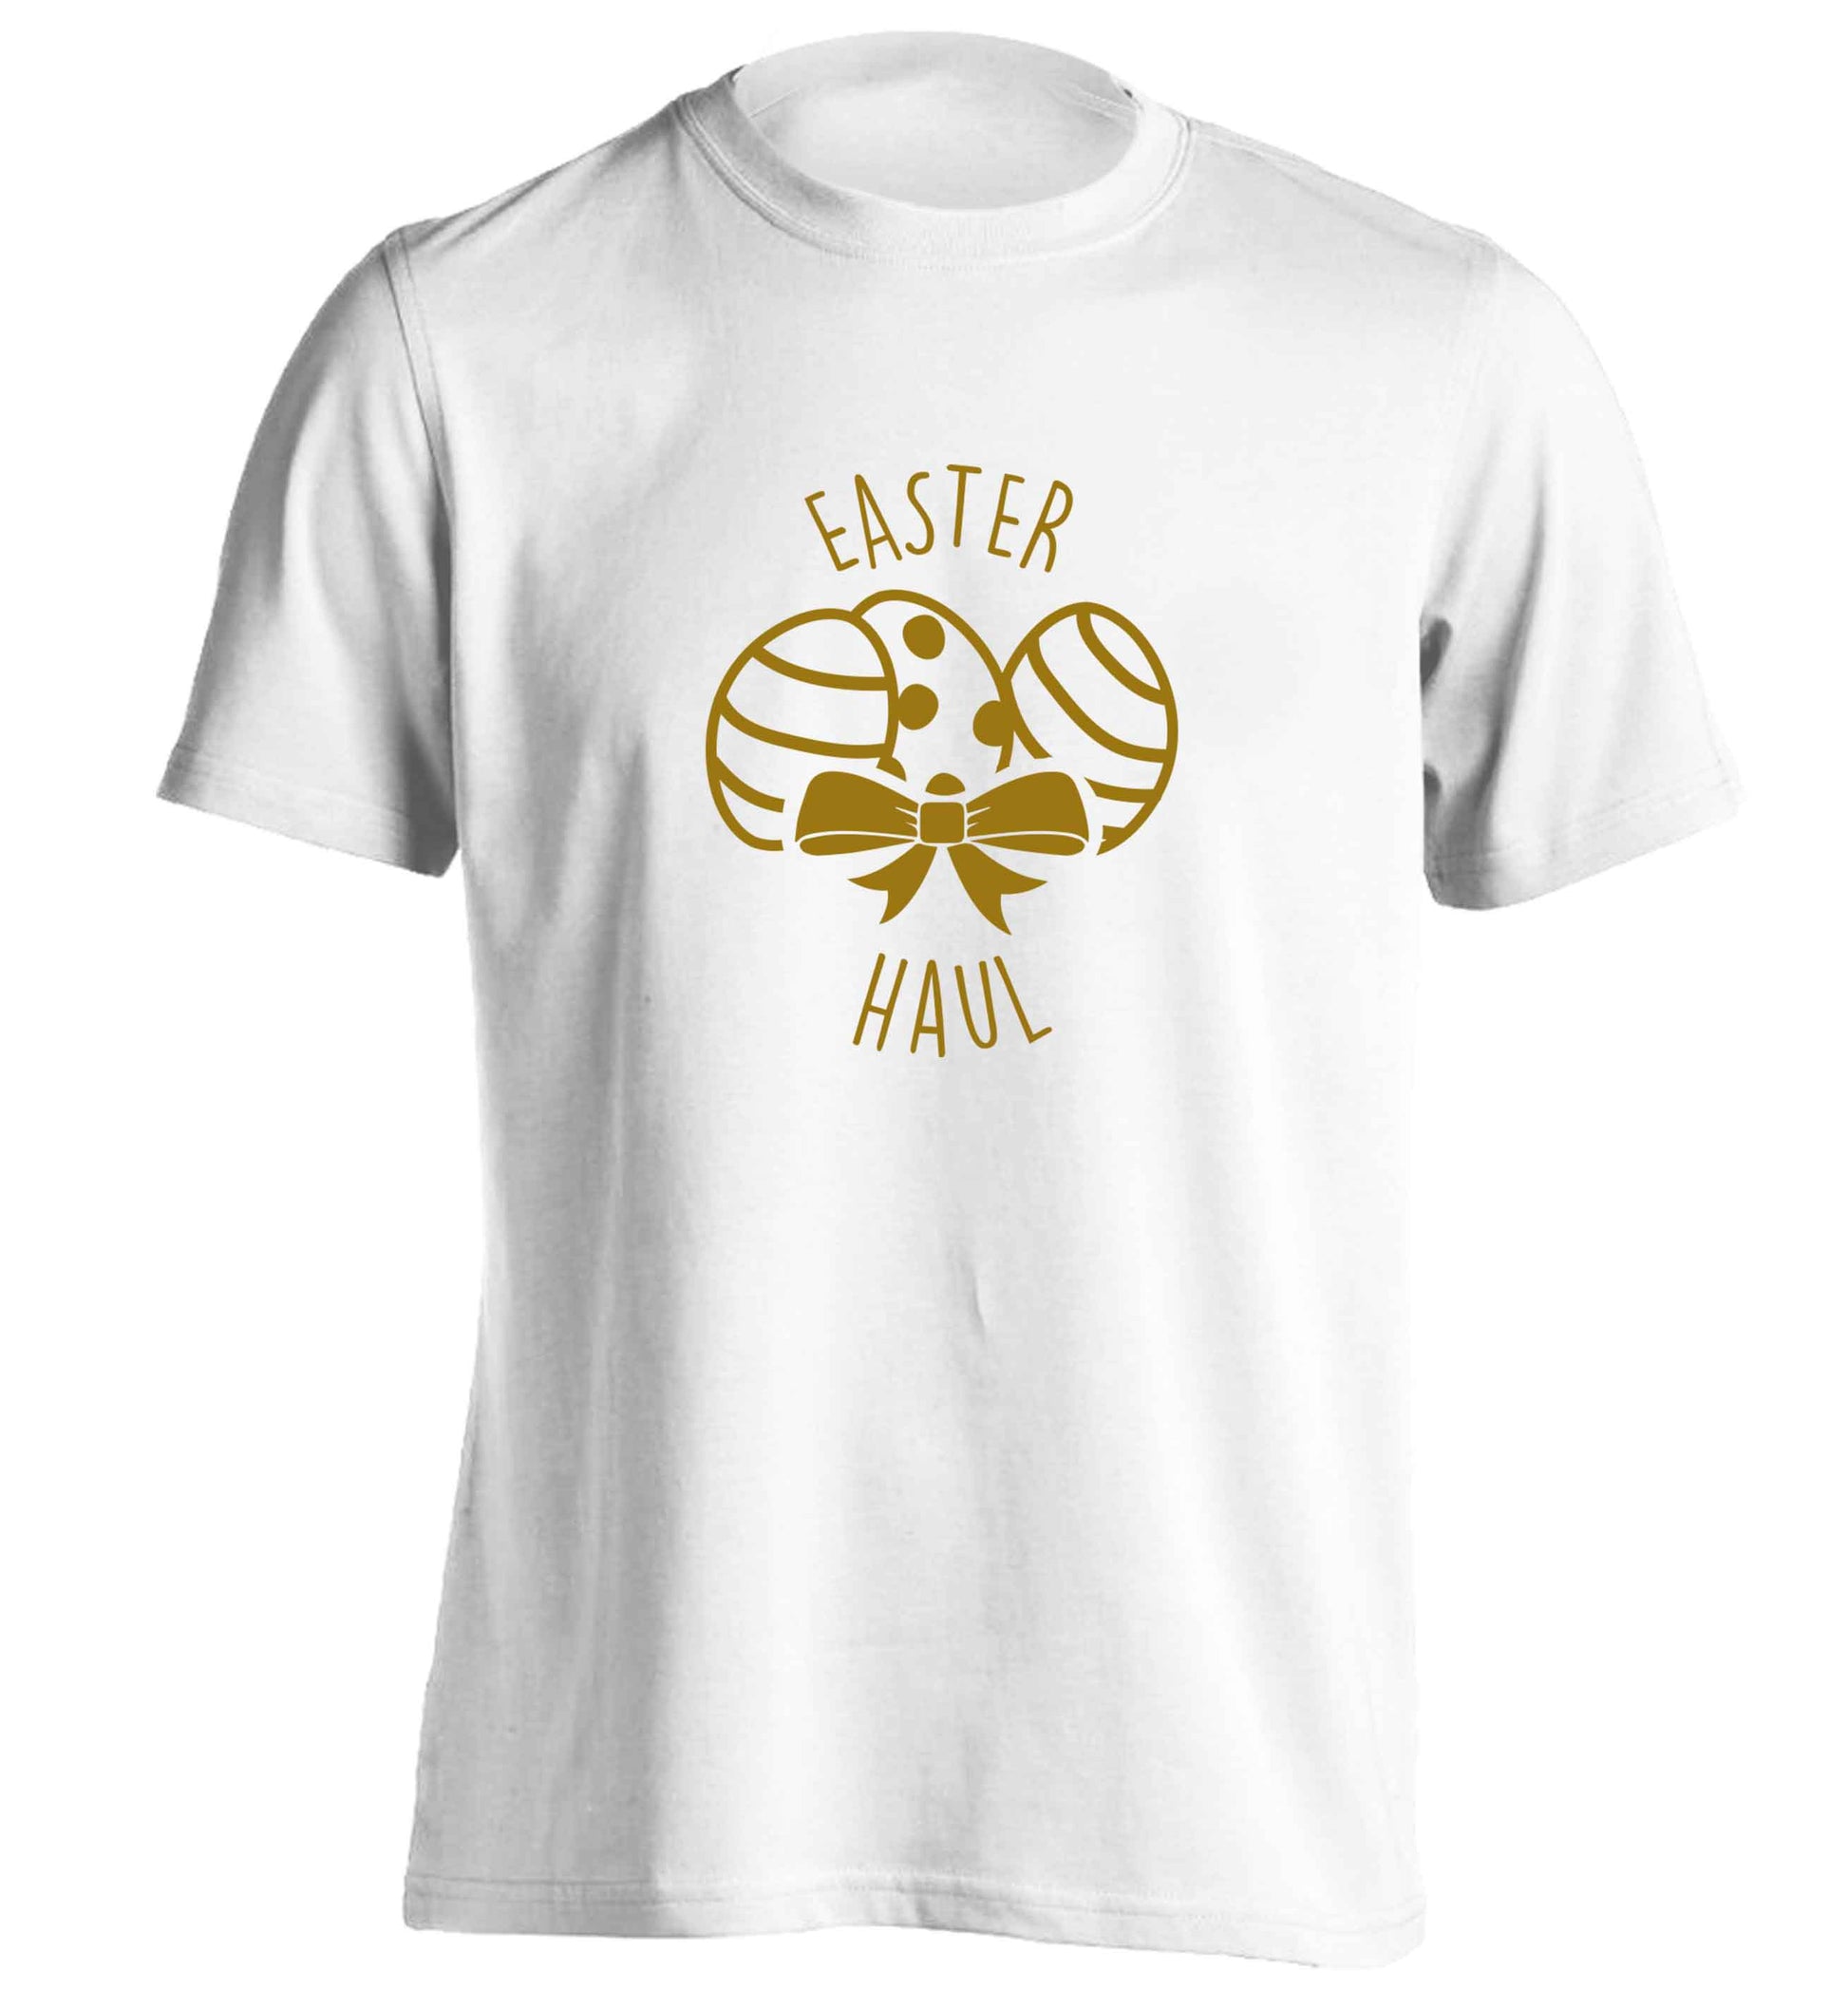 Easter haul adults unisex white Tshirt 2XL